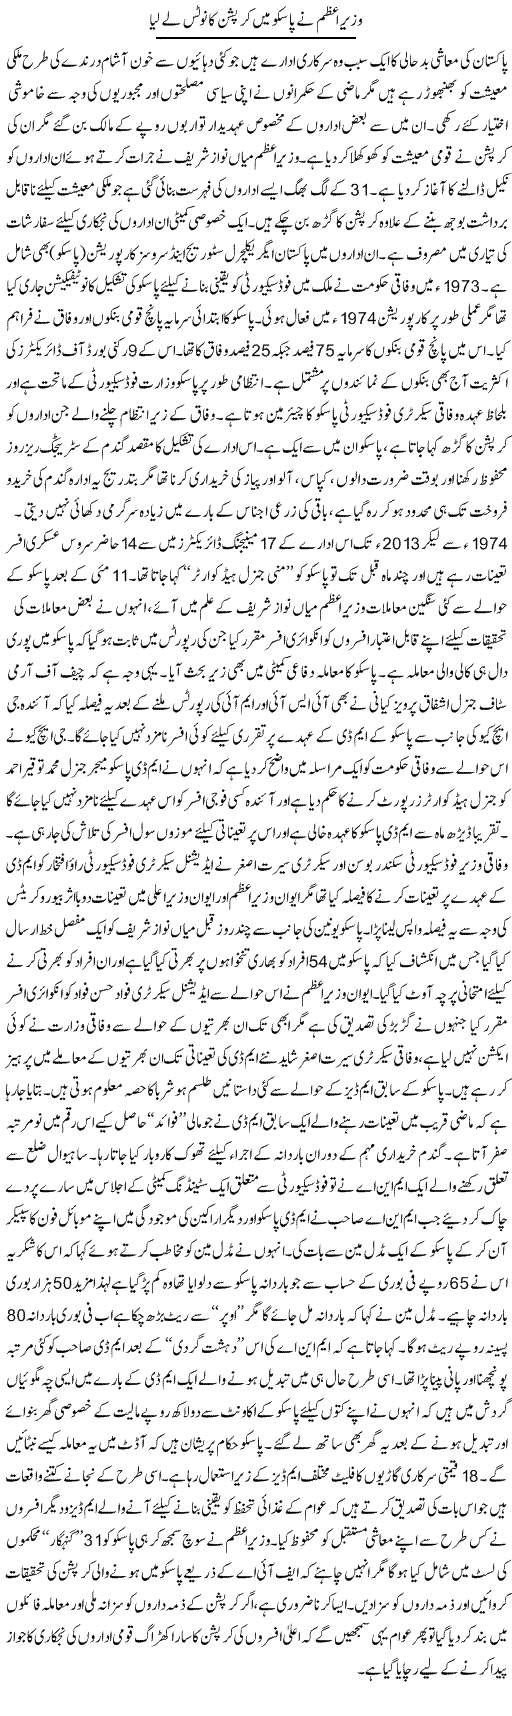 Wazeer e Azam Ne Pasko Mai Curruupton Ka Notice Le Liya | Rizwan Asif | Daily Urdu Columns